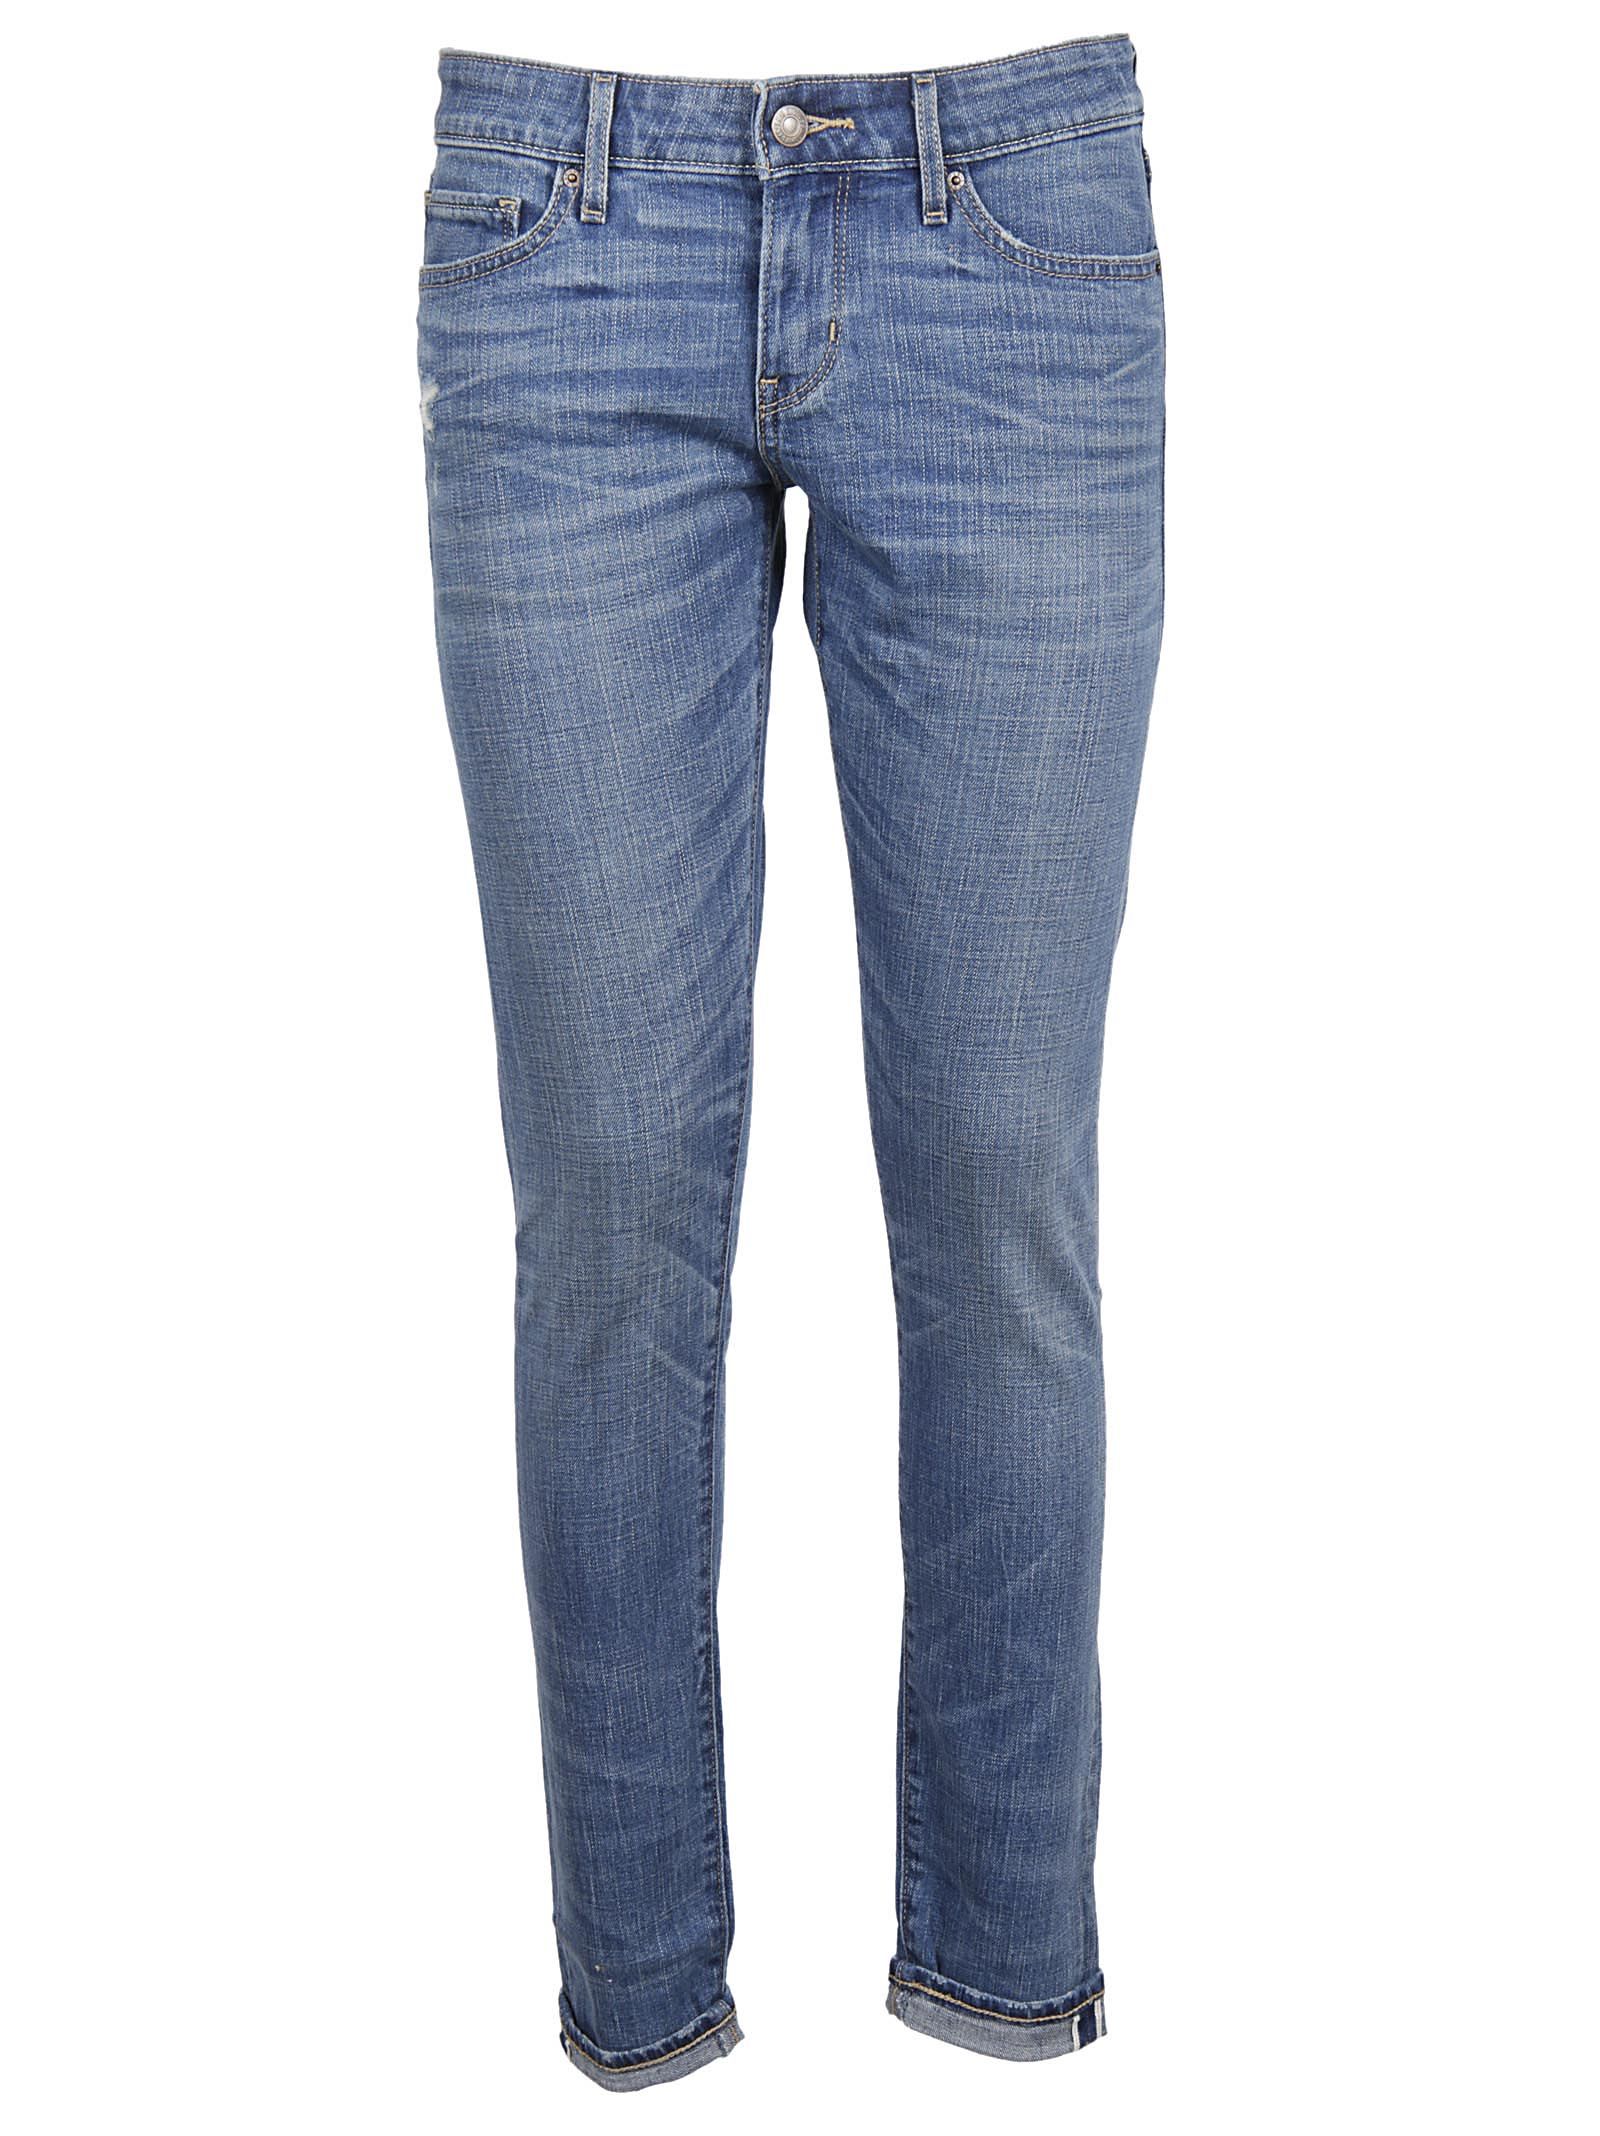 levis jeans 26 - StyleMann